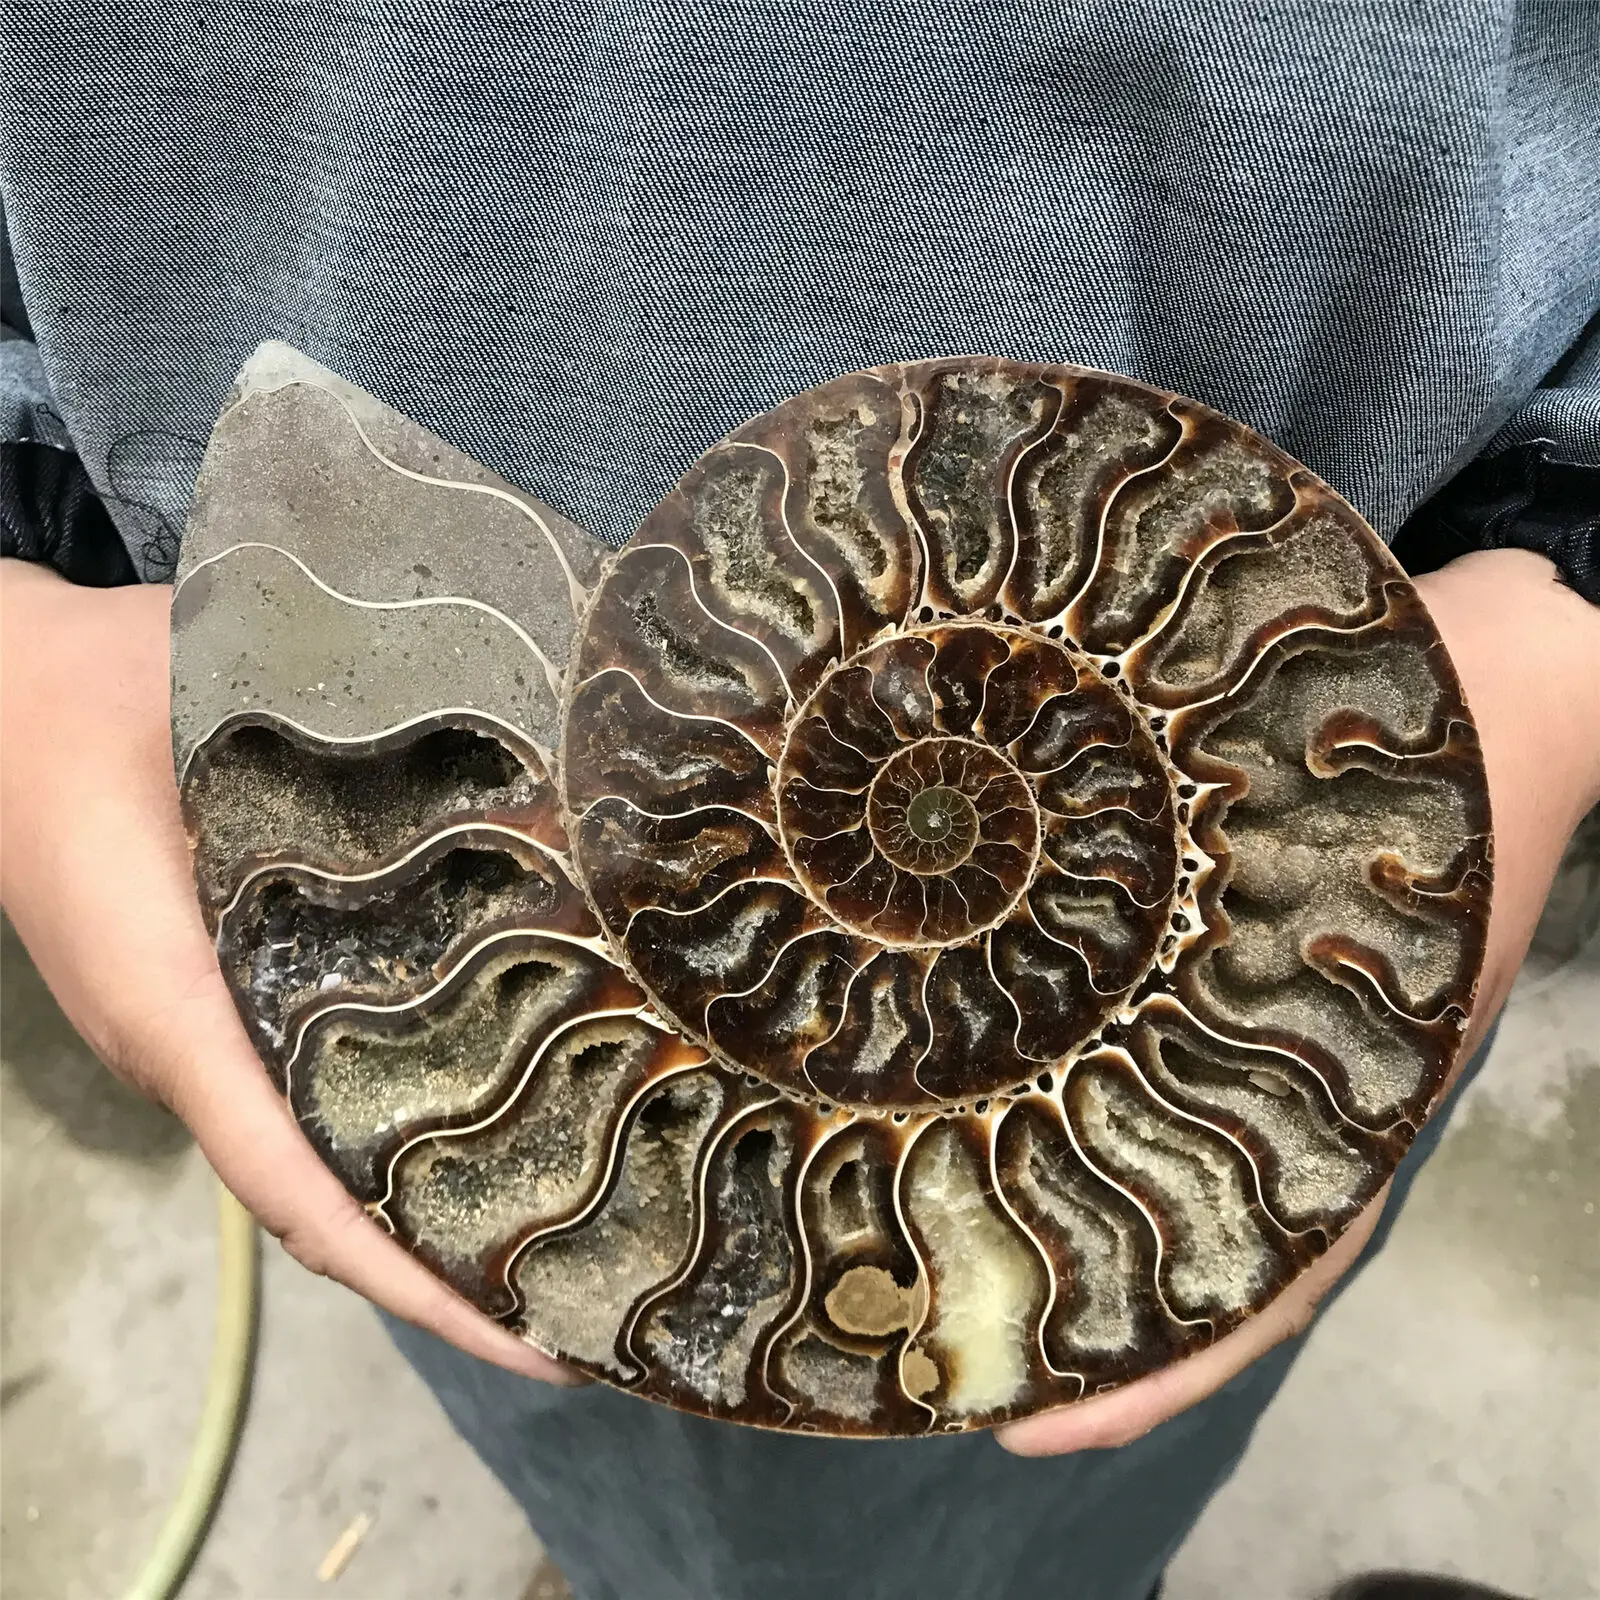 

200-800g big size madagascar fossils iridescent ammonite natural stones and minerals specimen+stand